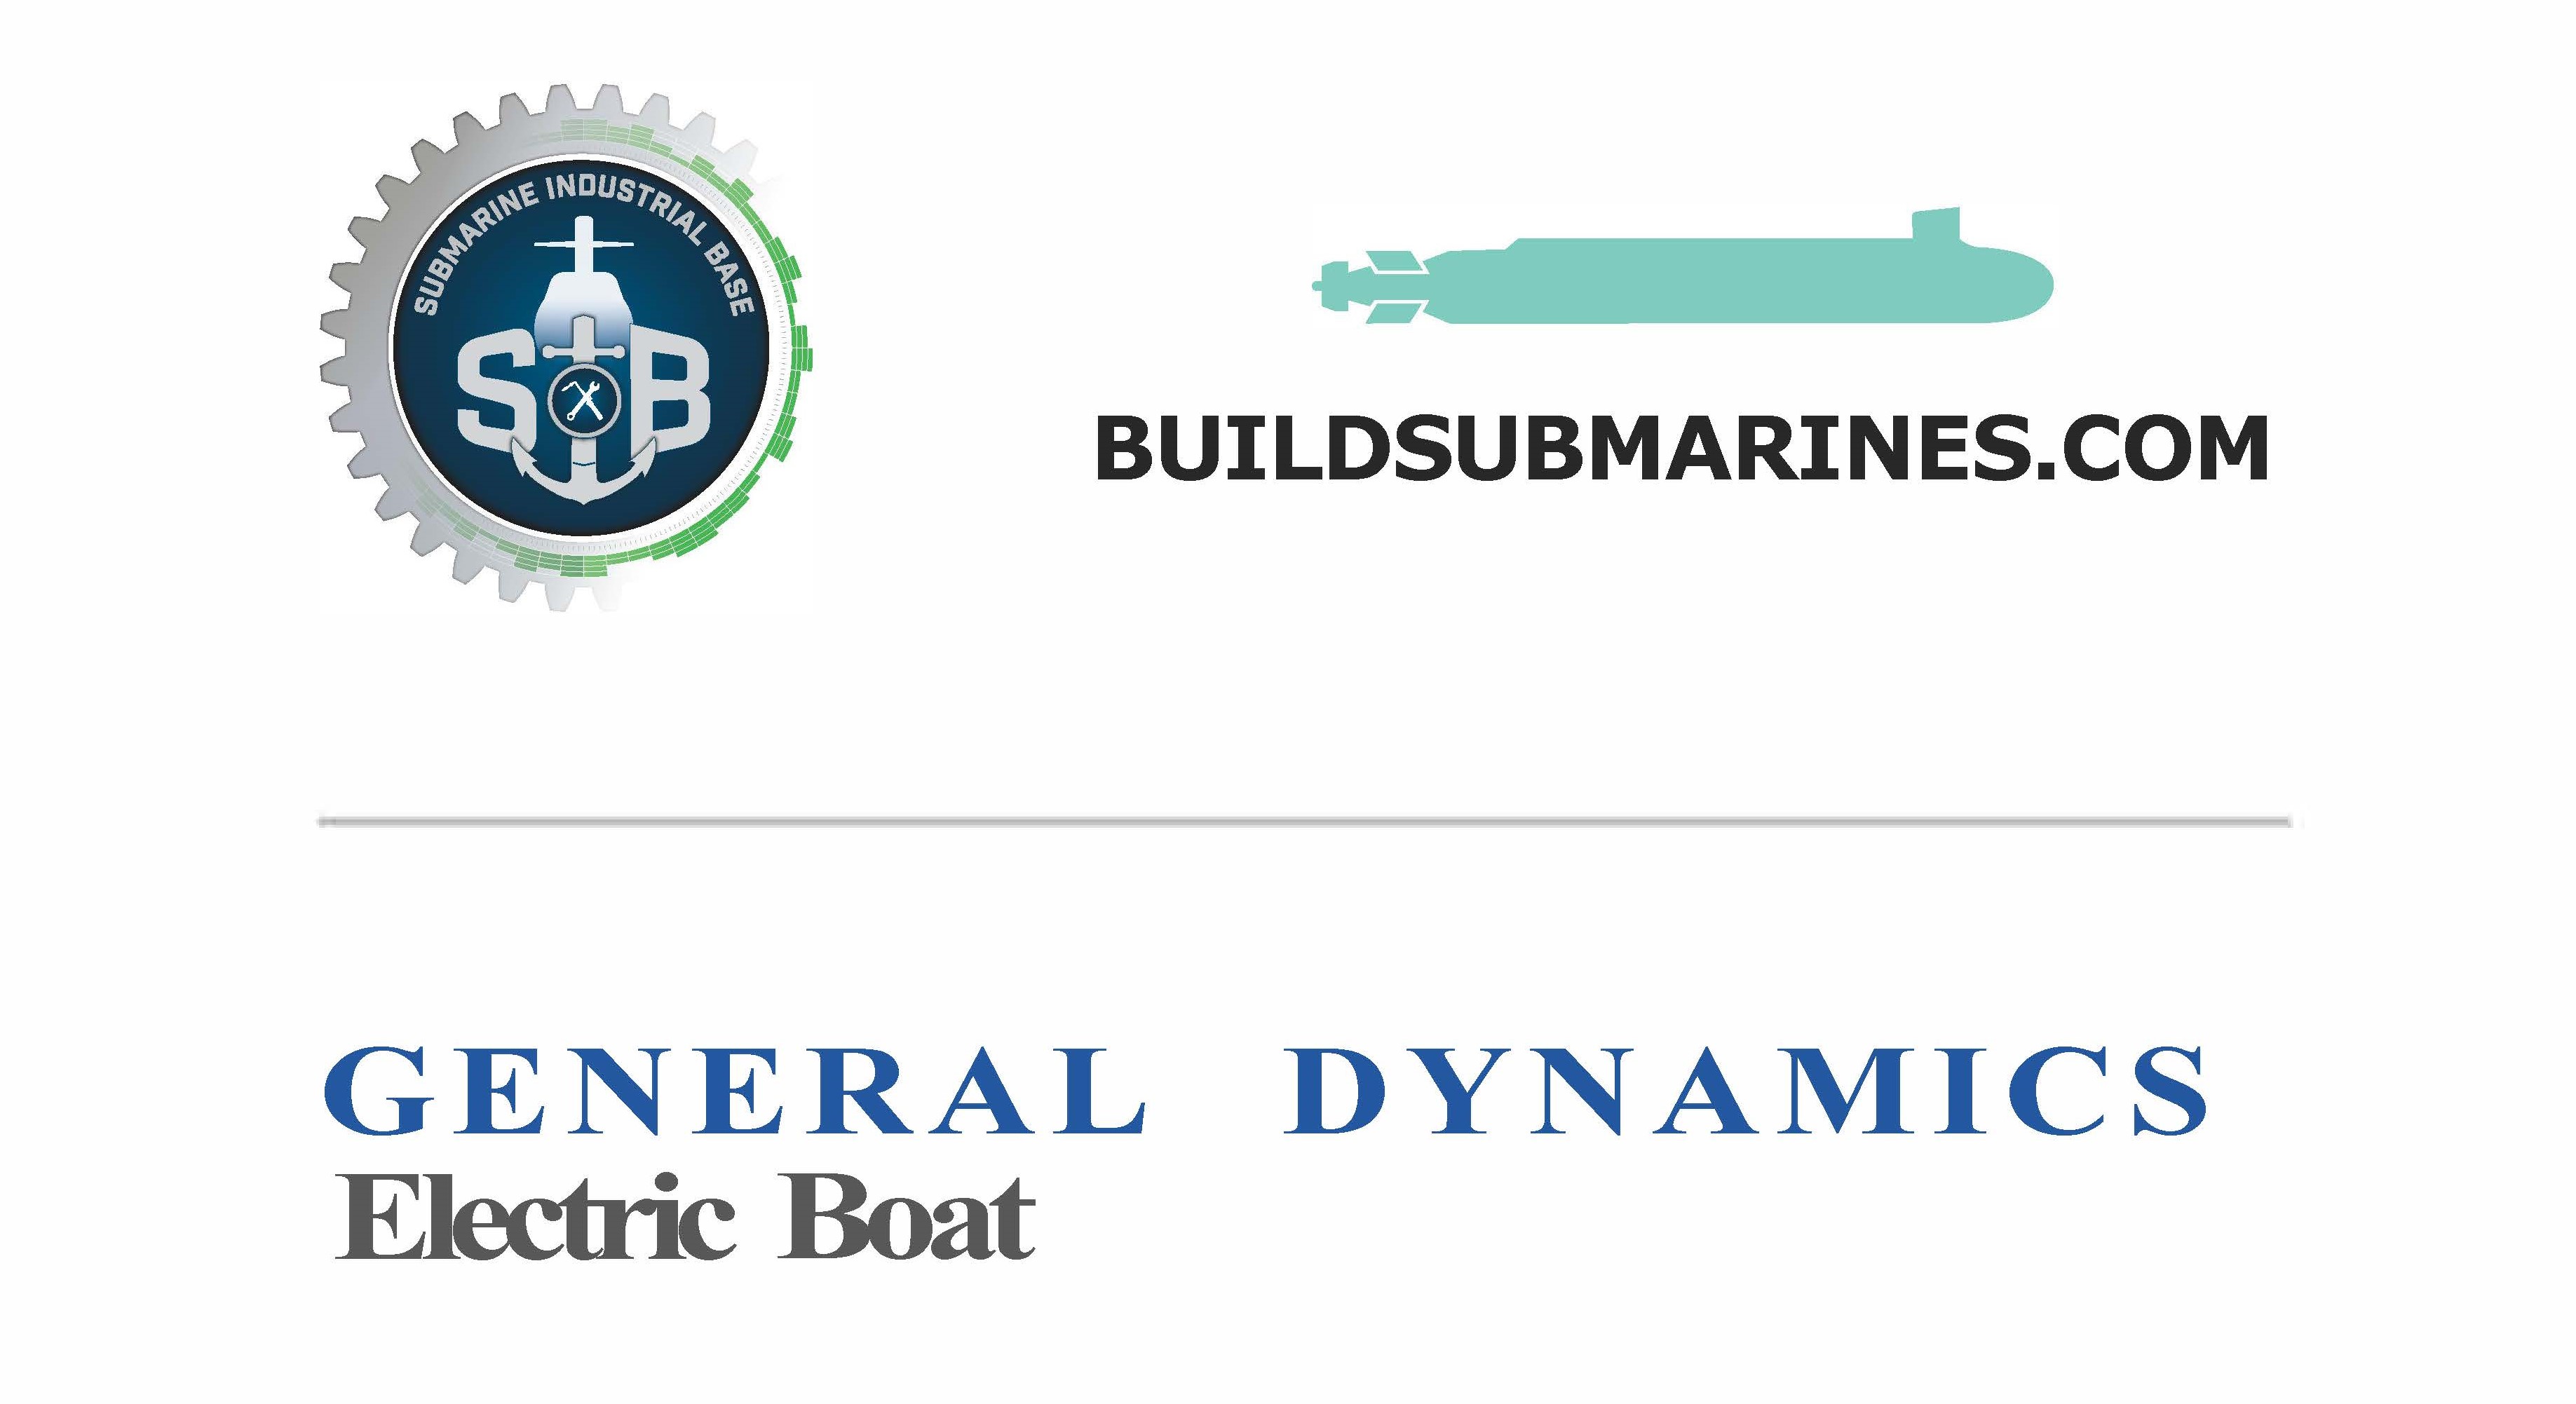 GENERAL DYNAMICS Electric Boat